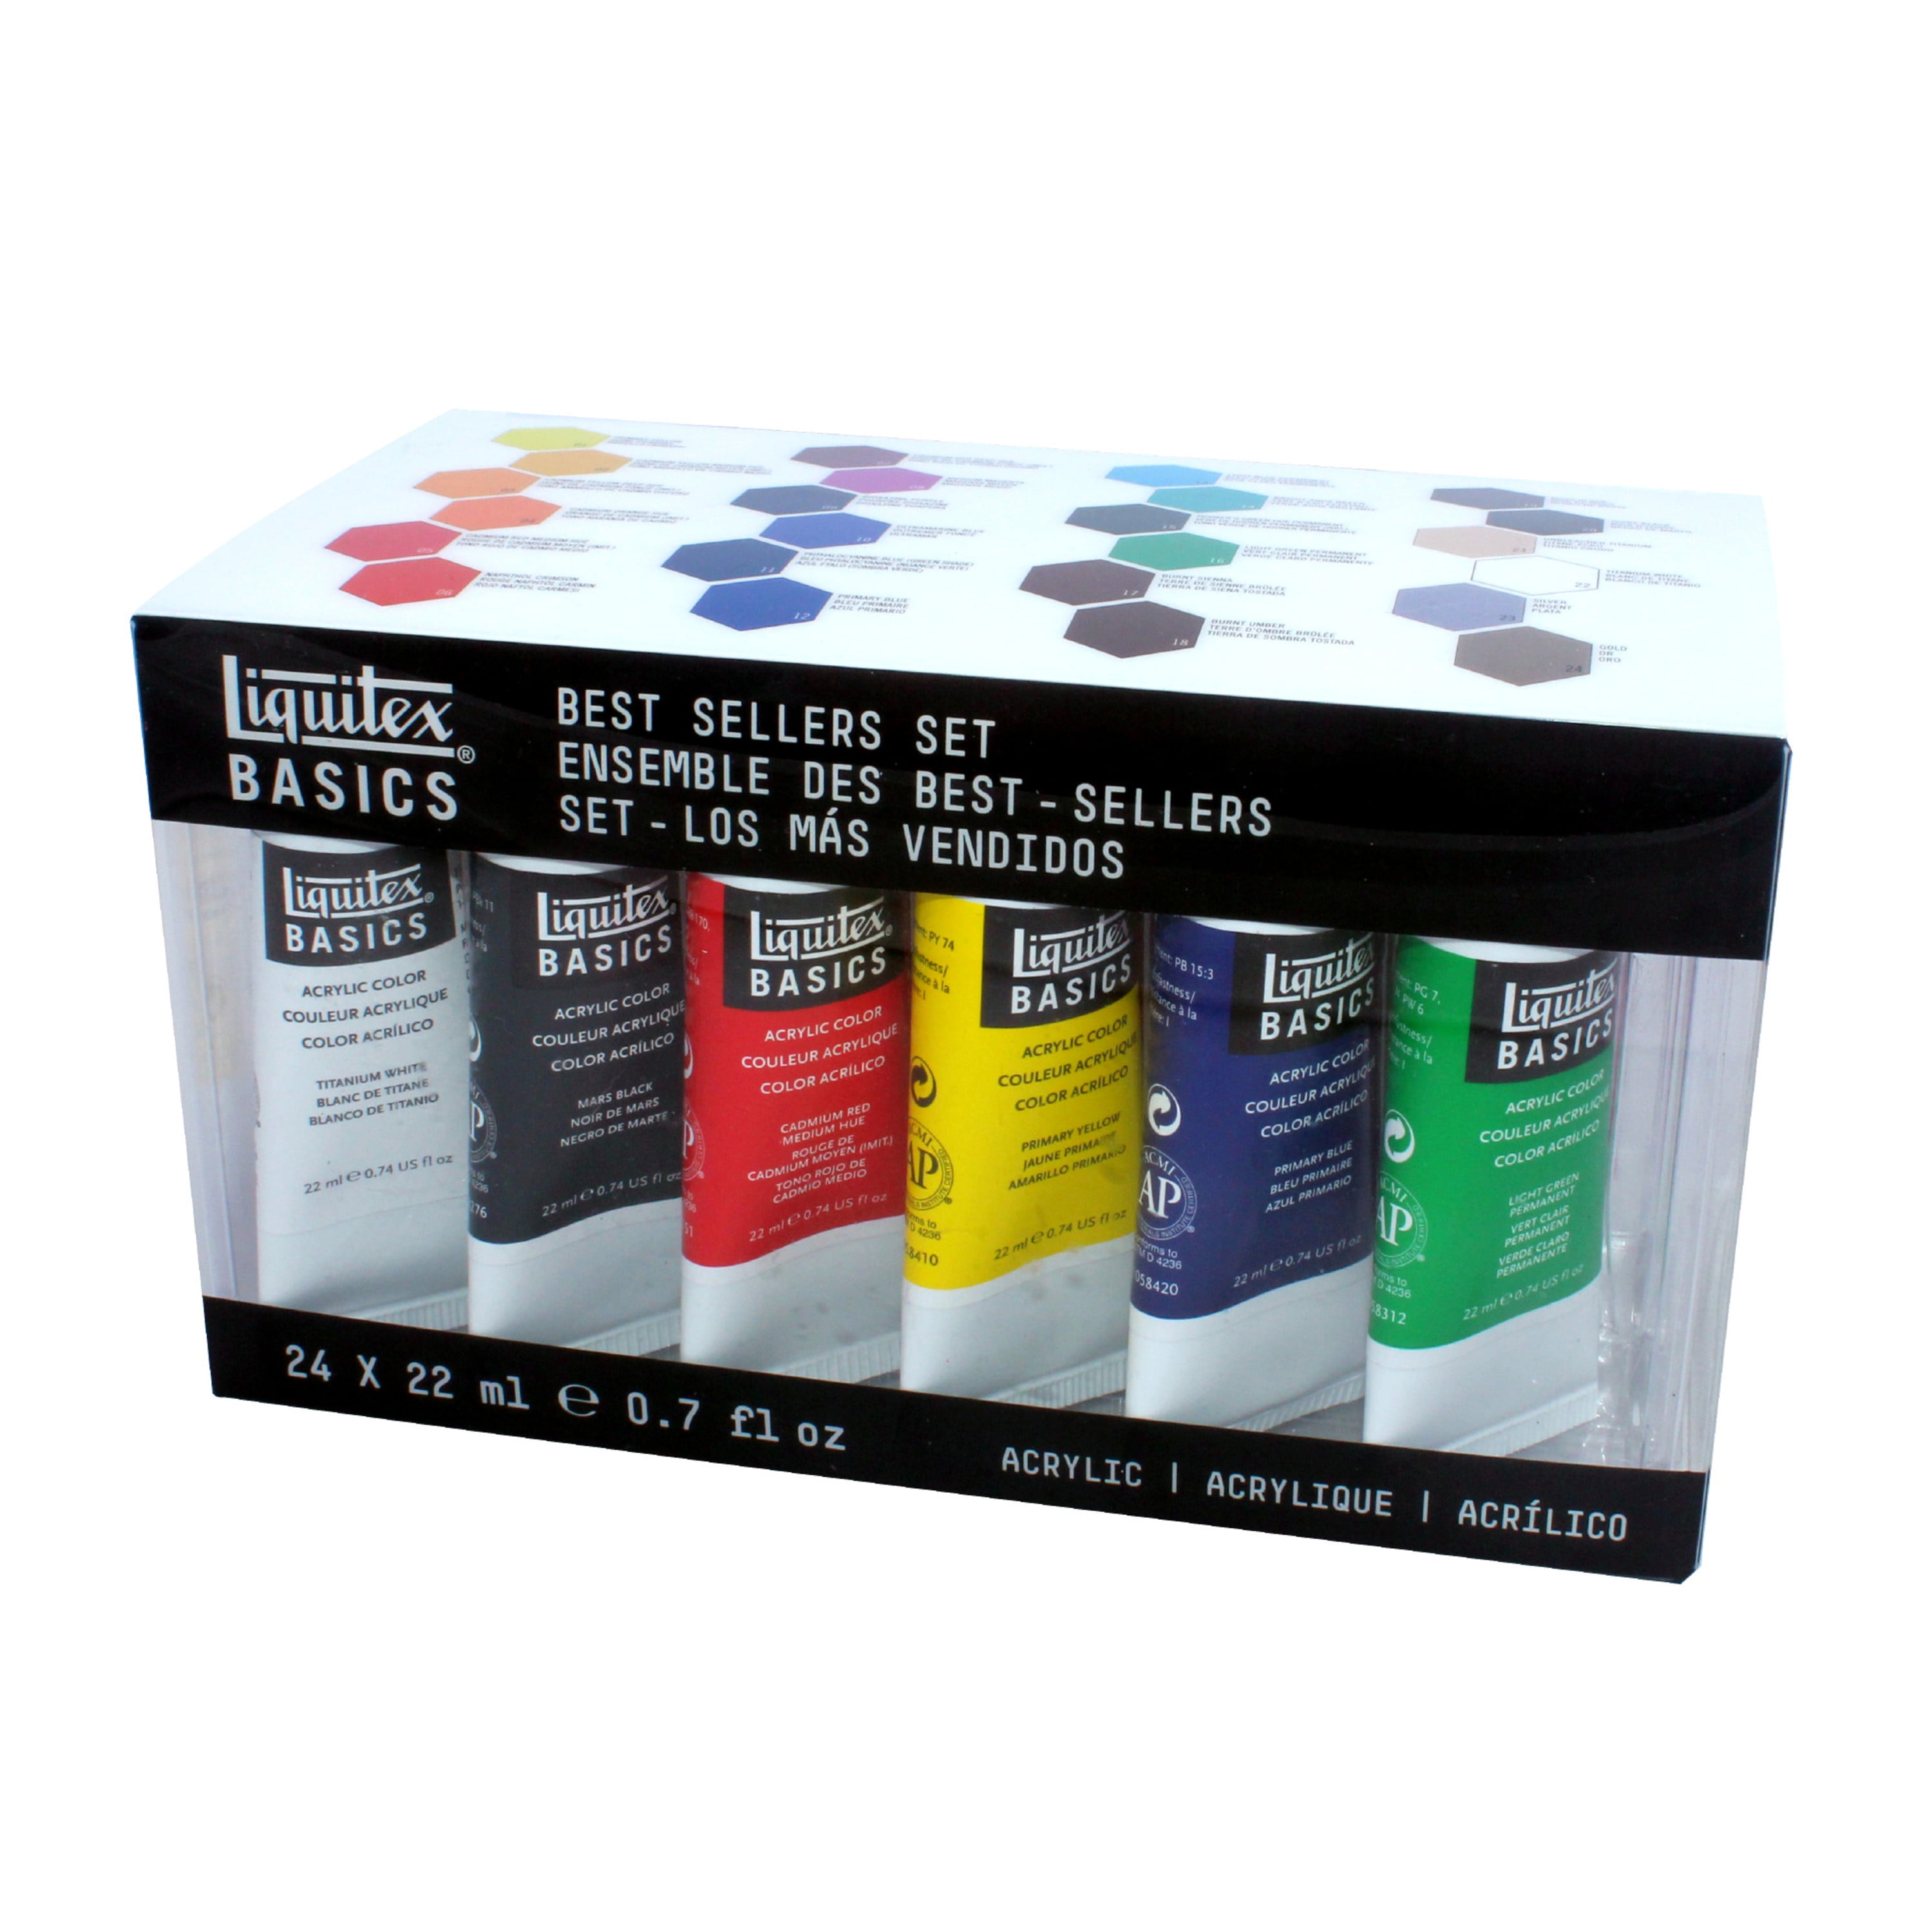 Liquitex BASICS Acrylic Paint 22ml 6/Pkg-Metallic & Iridescent -  887452030997